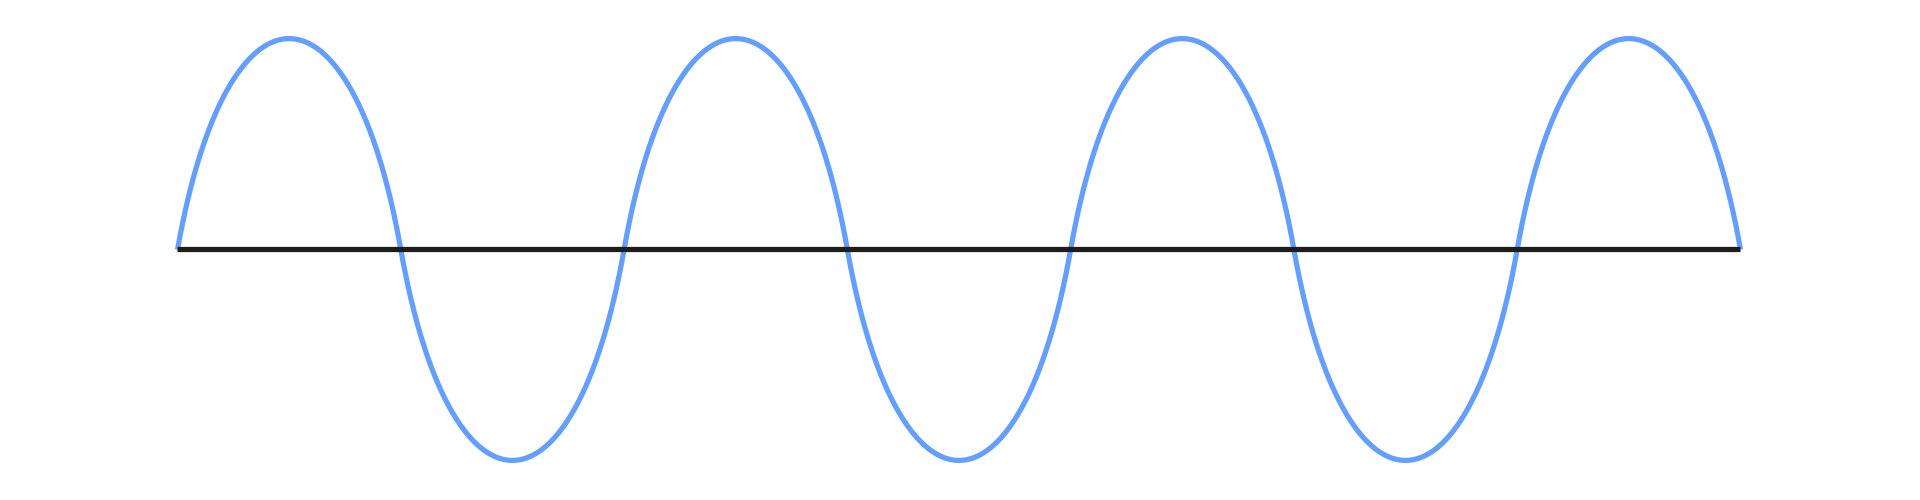 basic sound wave / audio waveform